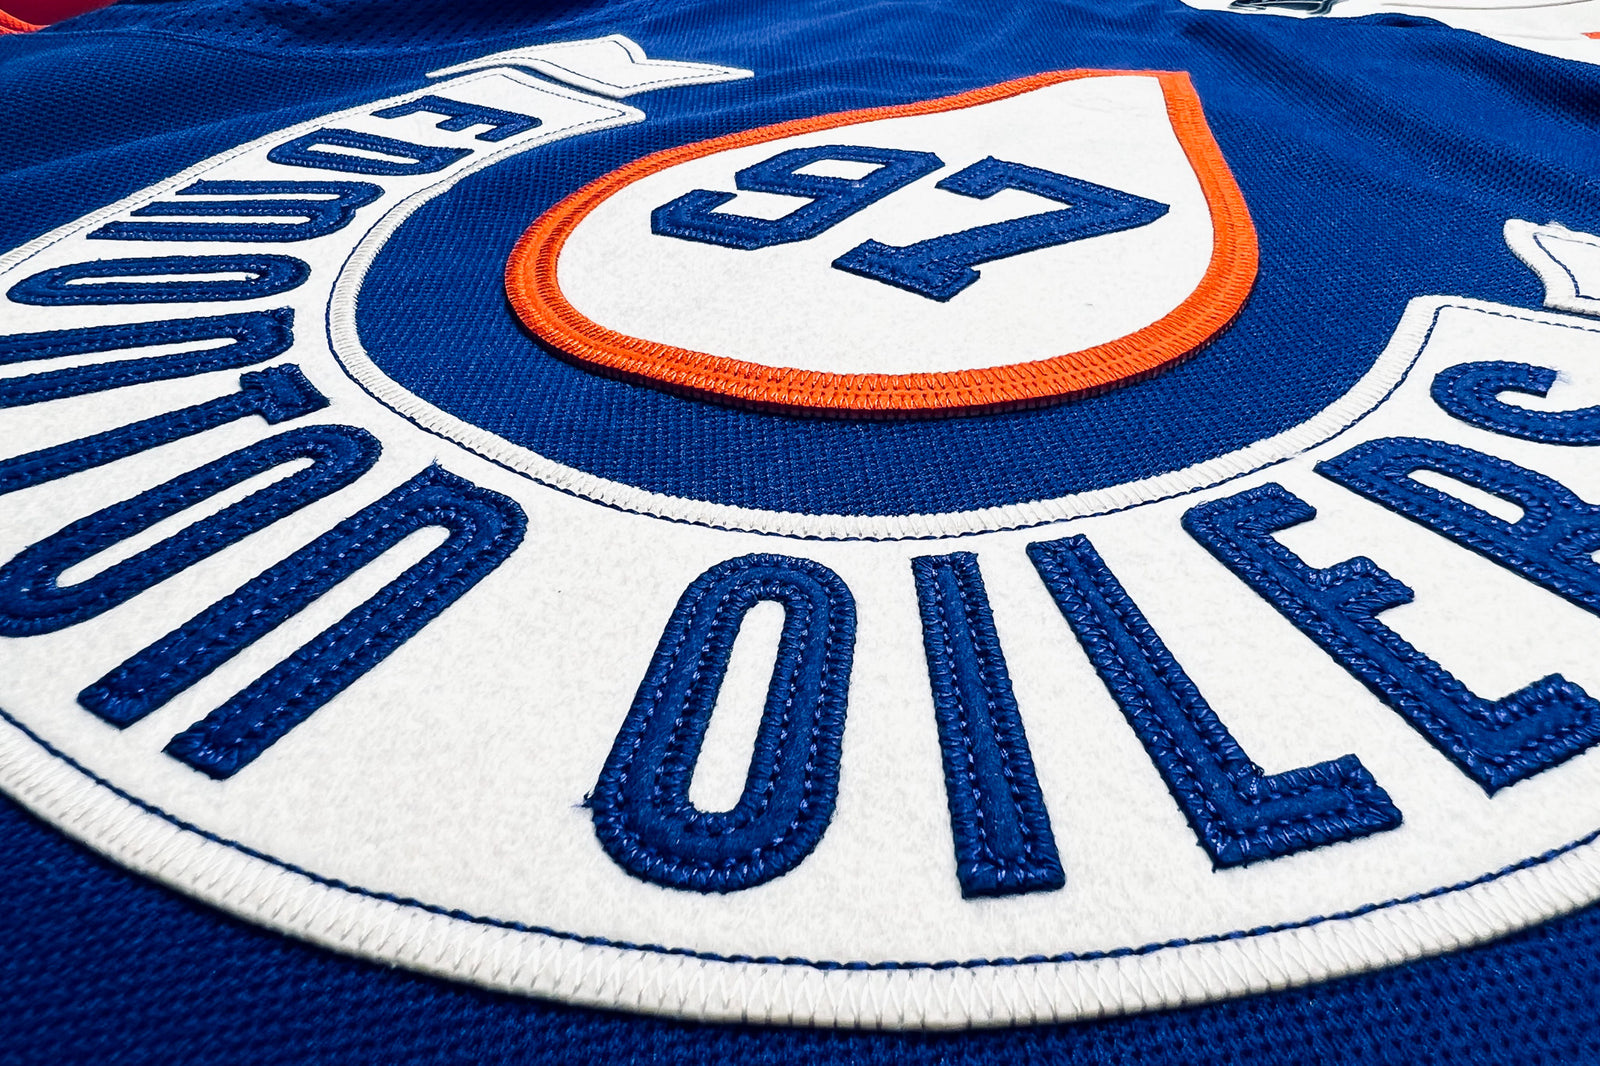 Oilers Heritage Classic❗ : r/hockeyjerseys